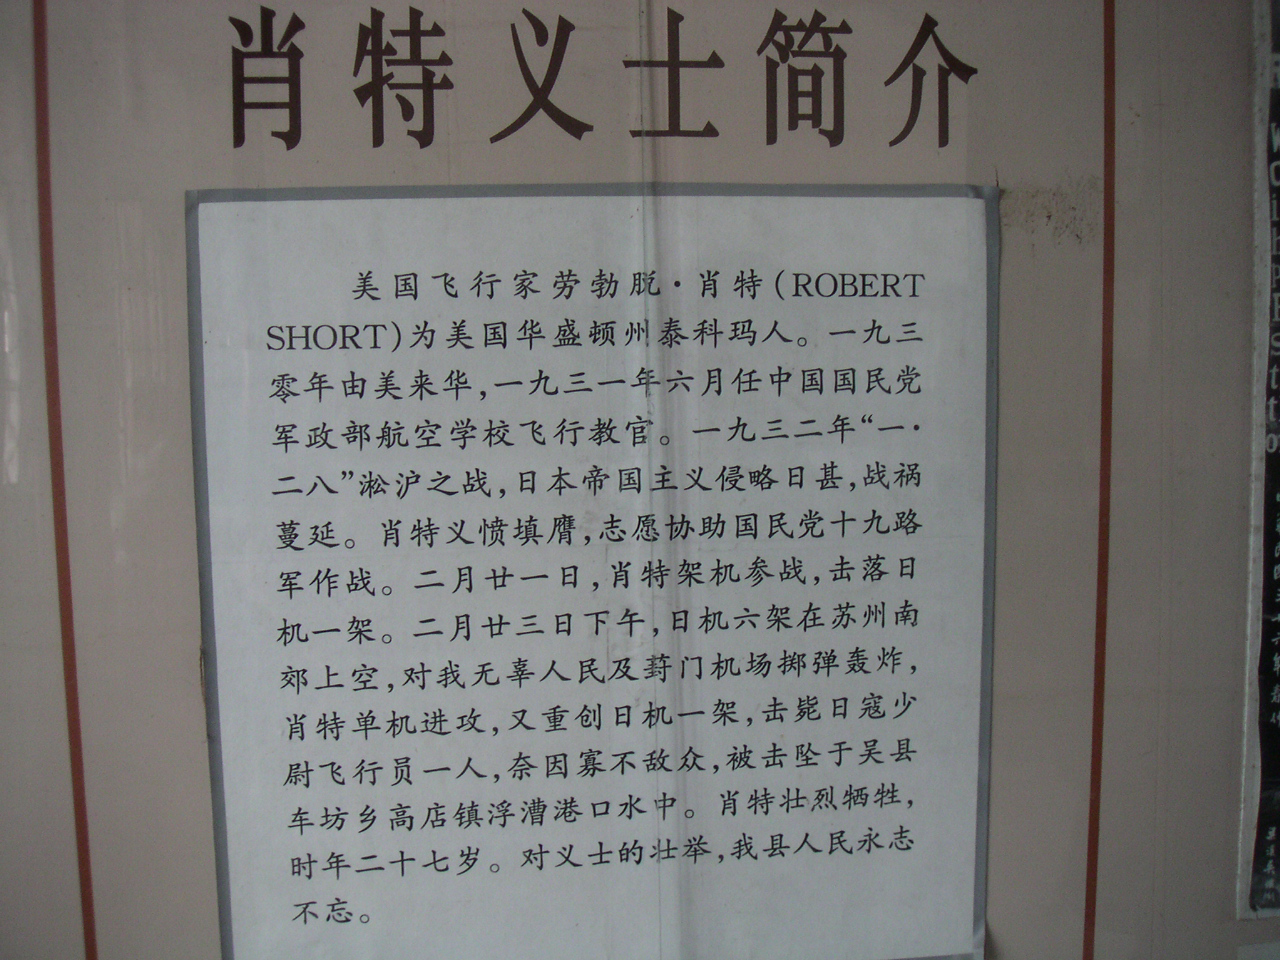 Chinese description